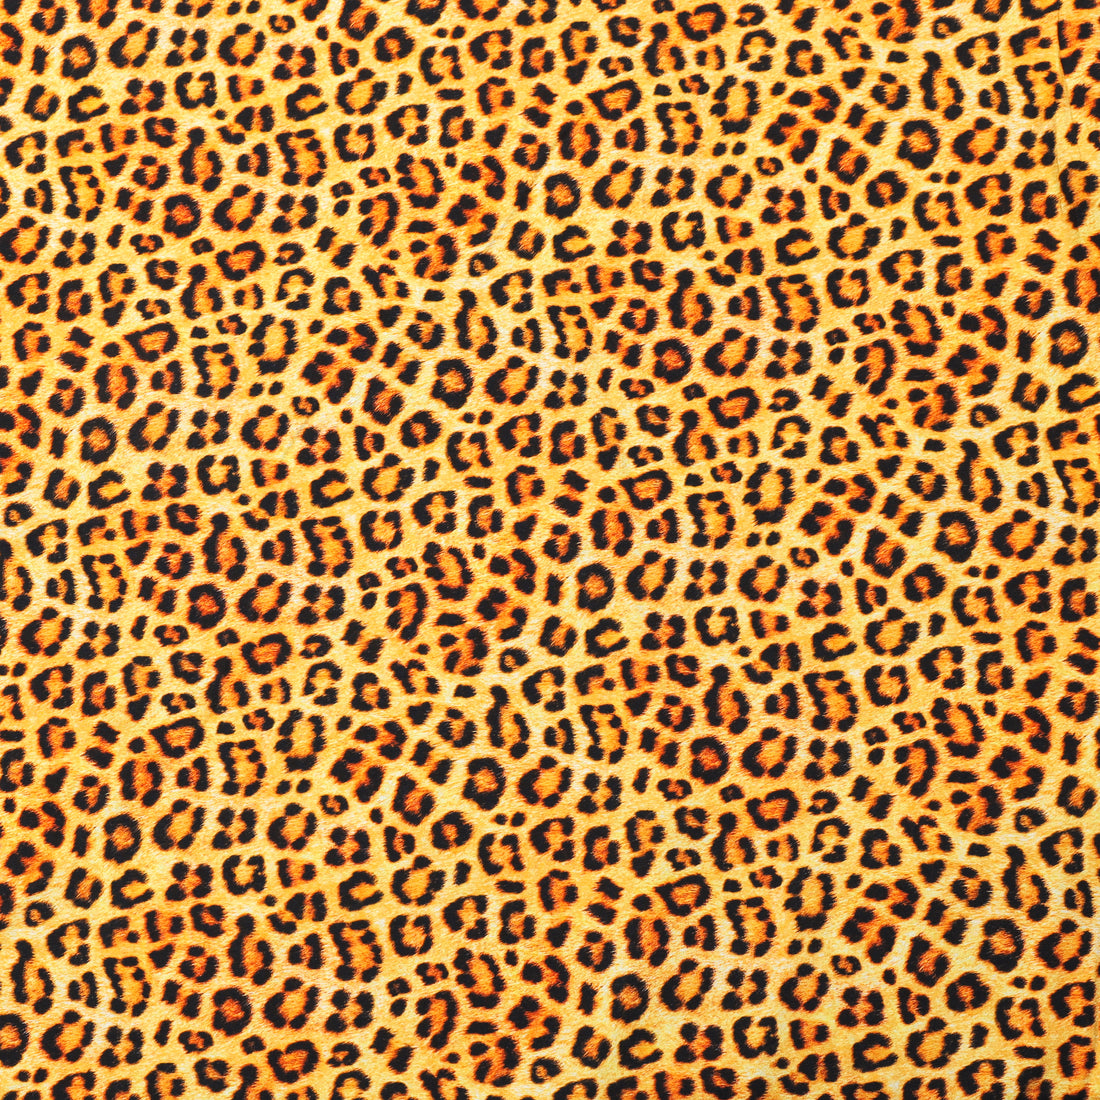 Cotton - Knit - Animal Kingdom - Cheetah